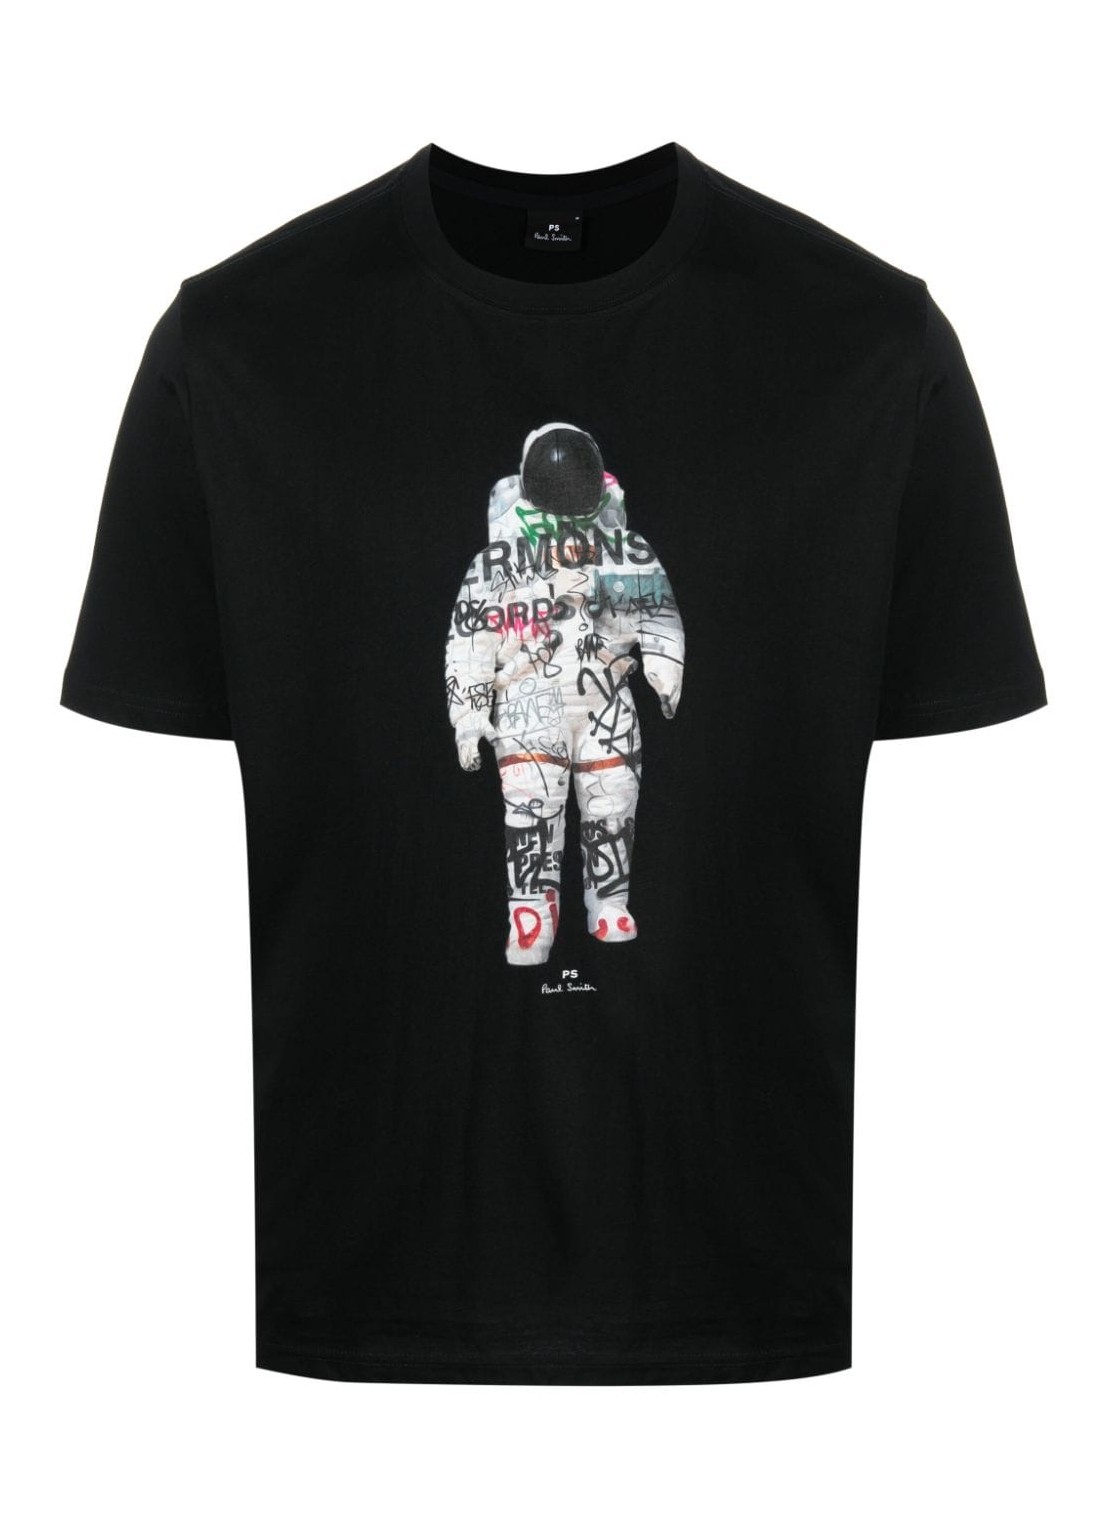 Camiseta ps t-shirt man mens reg fit t shirt astronaut m2r011rmp4445 79 talla M
 